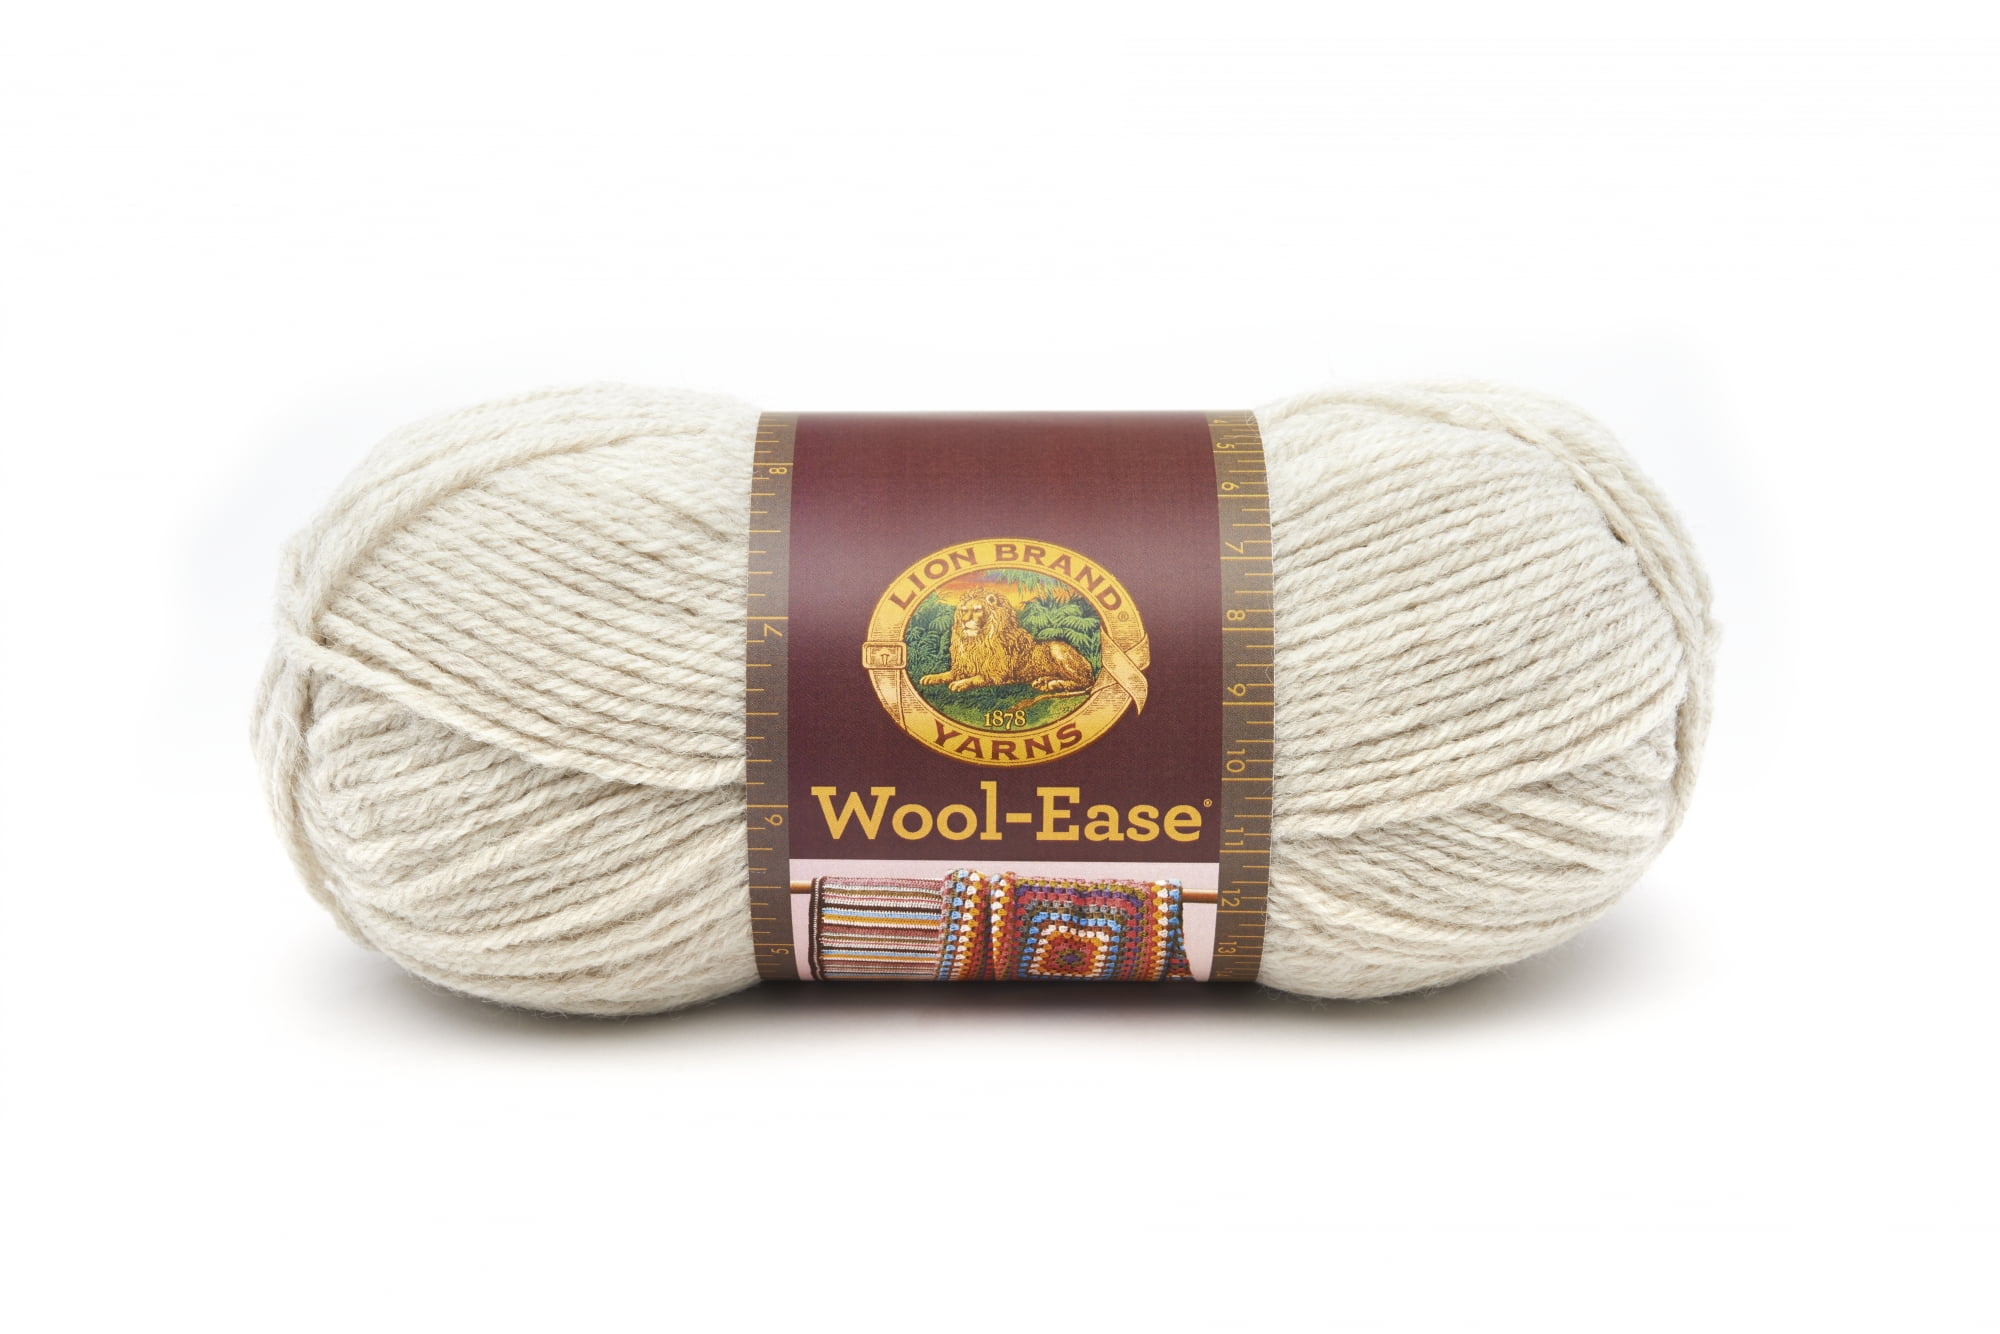 Lion Brand Yarn Wool-Ease Natural Heather 620-098 Classic Wool Yarn